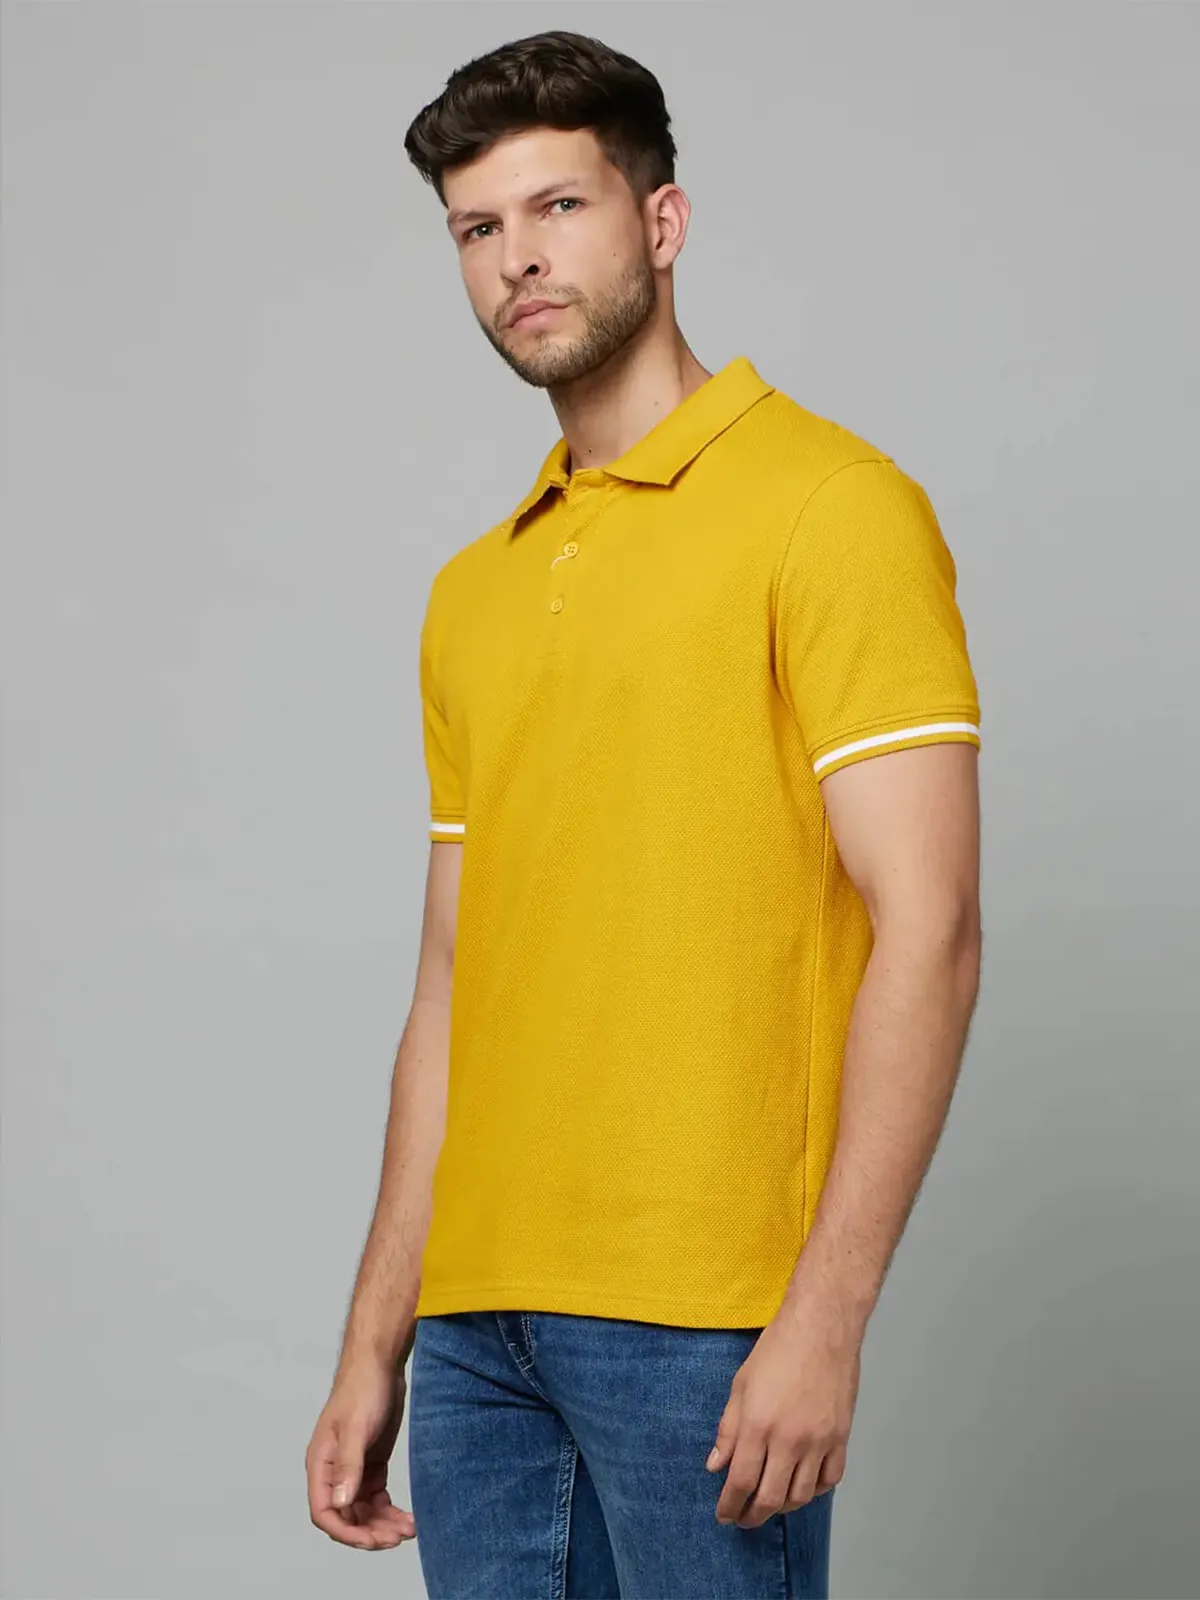 Celio cotton mustard yellow t shirt